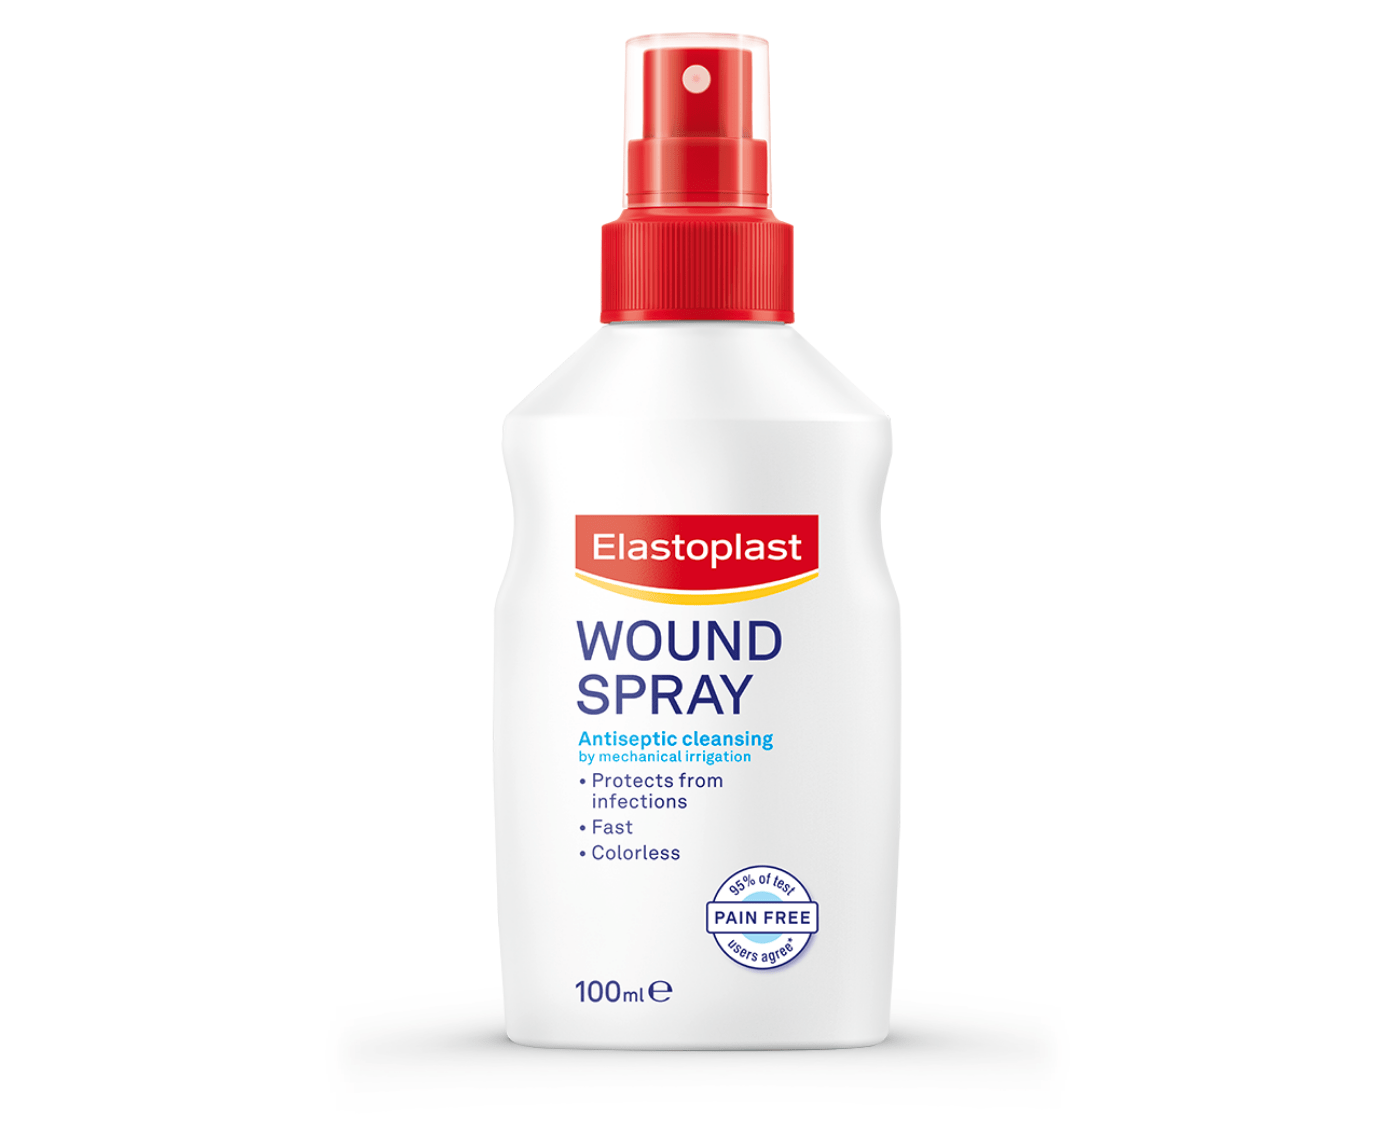 Packshot of Elastoplast Wound Spray